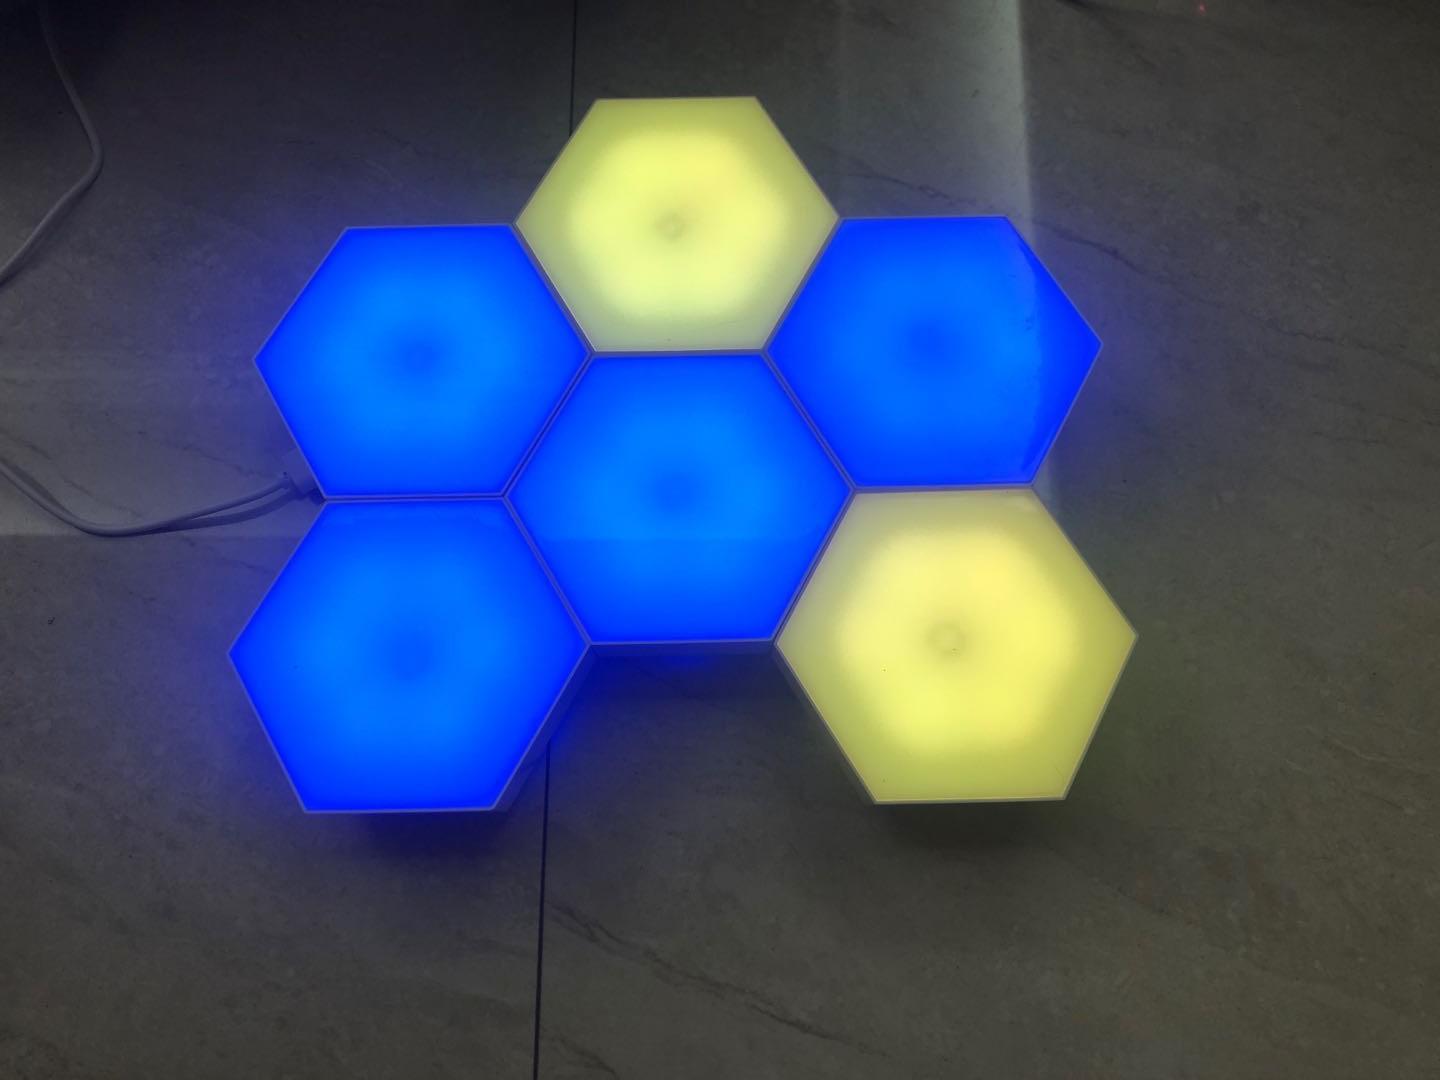 Multi-colors hand touch sensing modular night light hexagonal black family quantum honeycomb induction wall lamp